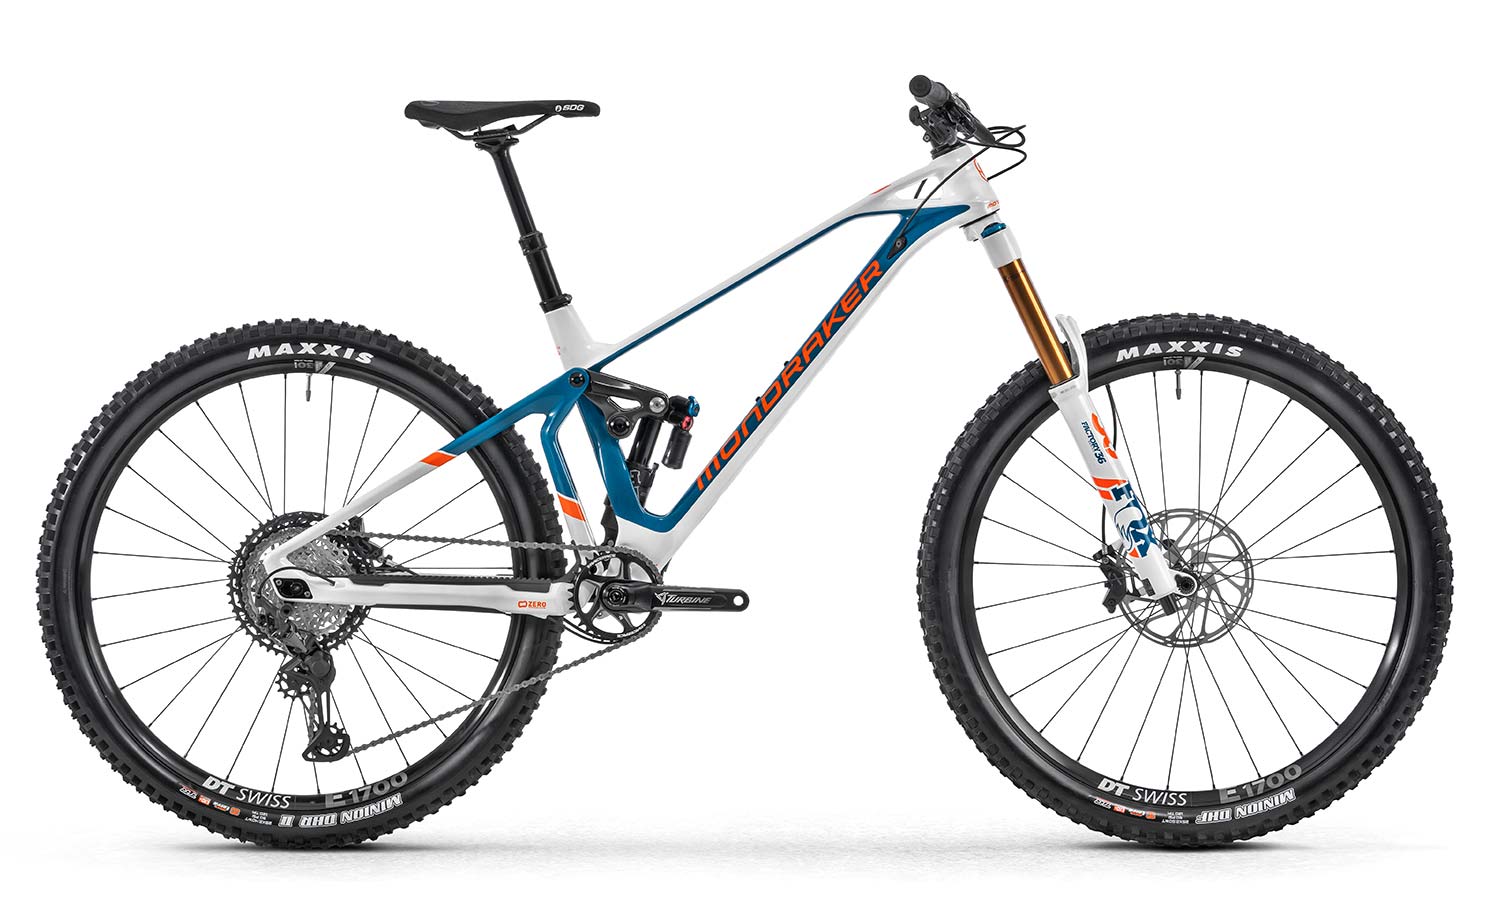 2020 Mondraker Super Foxy Carbon enduro bike, 160mm travel full carbon adjustable enduro 29er mountain bike